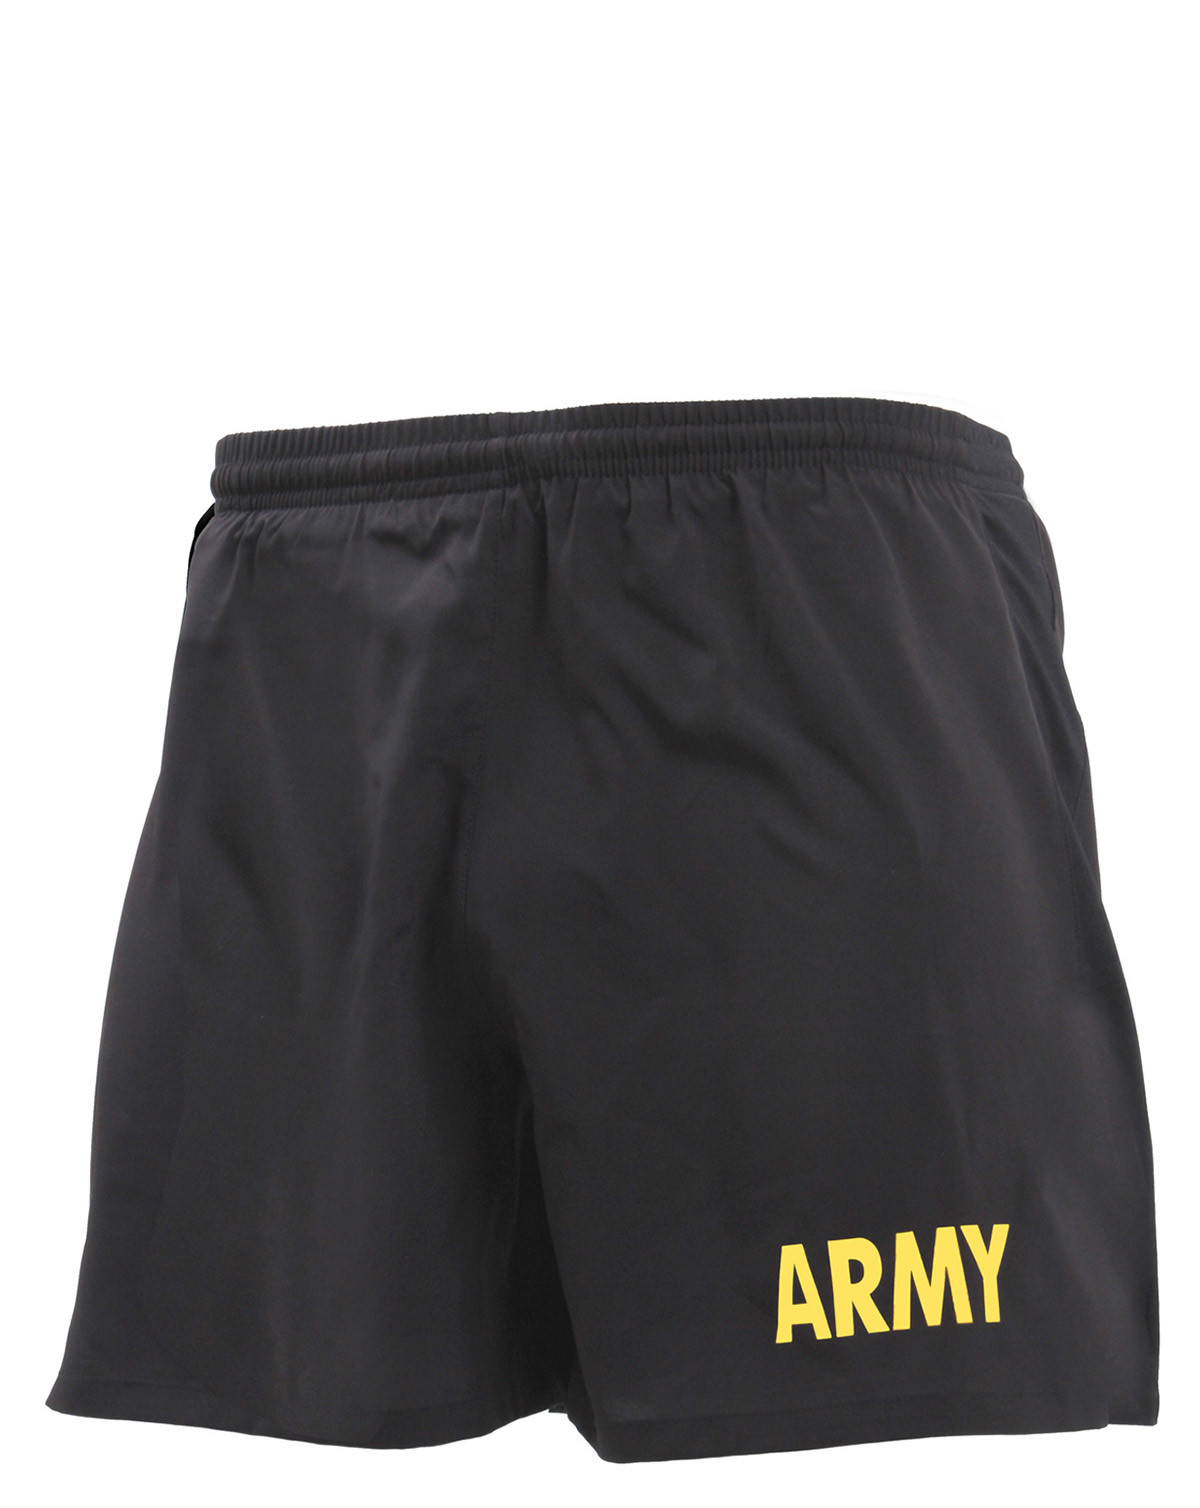 Rothco Army PT Trænings Shorts (Sort, S)